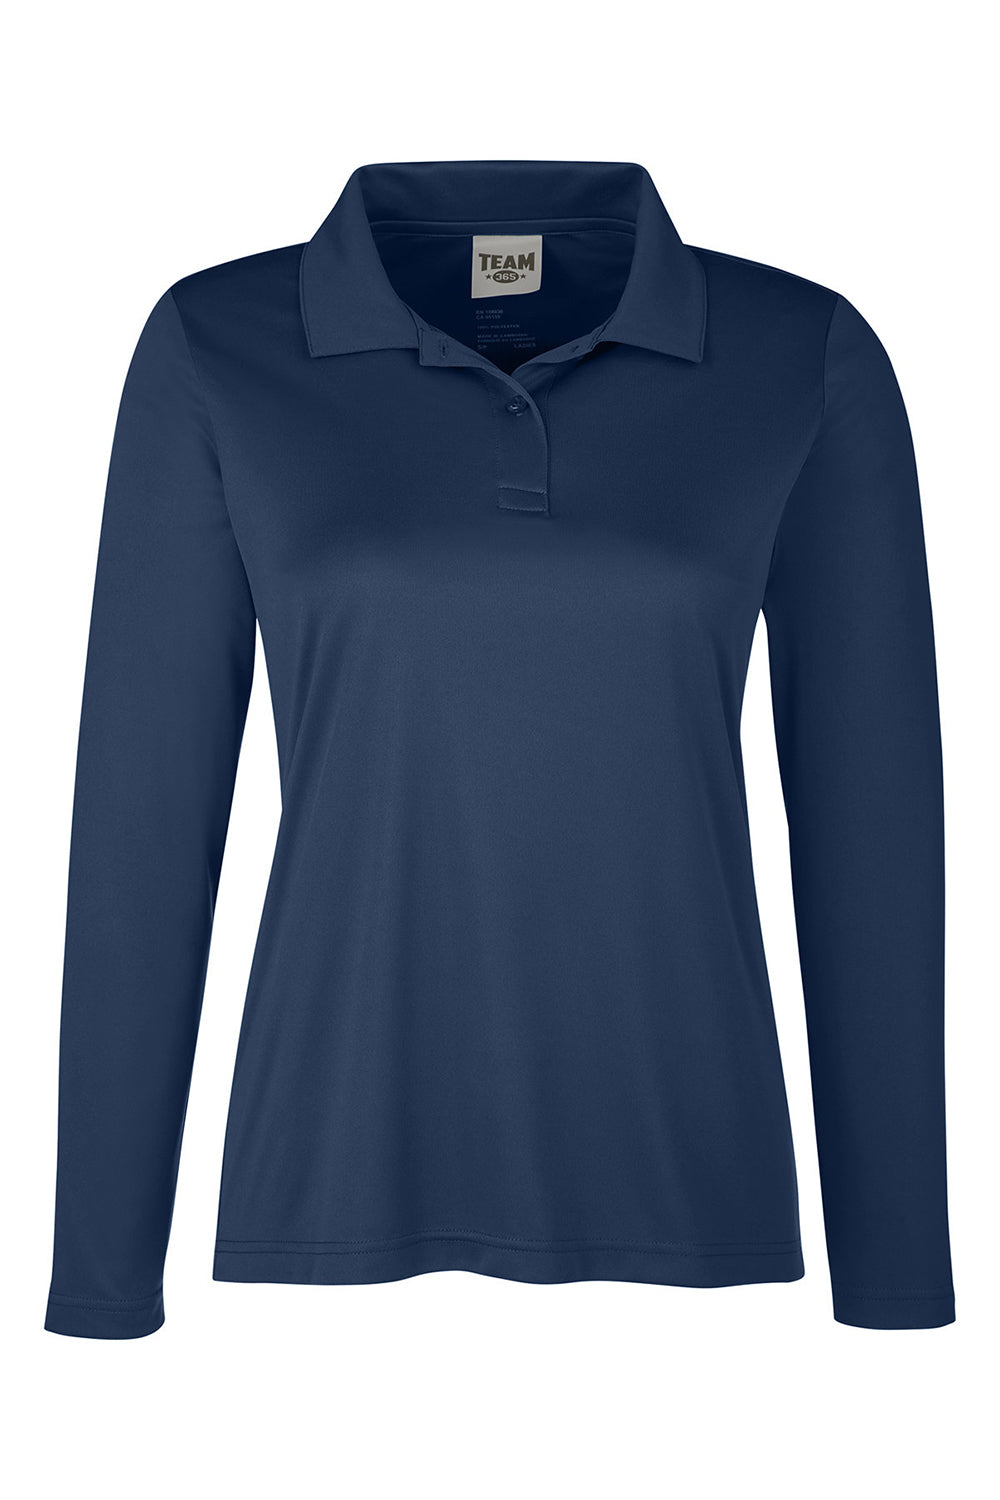 Team 365 TT51LW Womens Zone Sonic Moisture Wicking Long Sleeve Polo Shirt Dark Navy Blue Flat Front